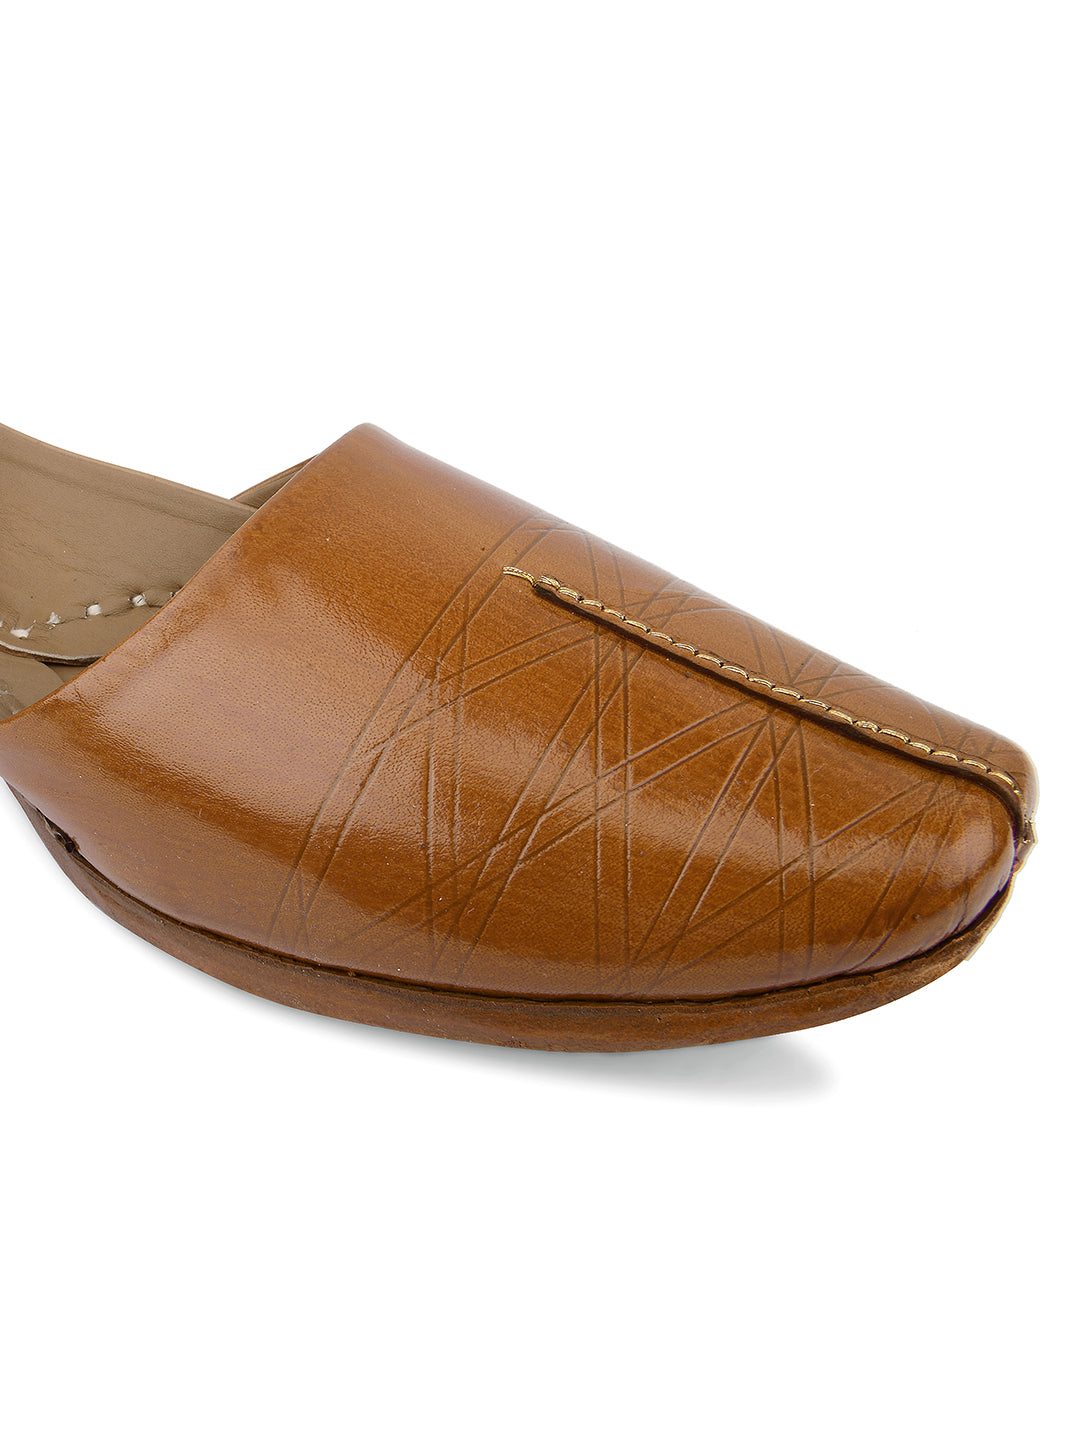 DESI COLOUR Mens Brown Ethnic Footwear/Punjabi Jutti